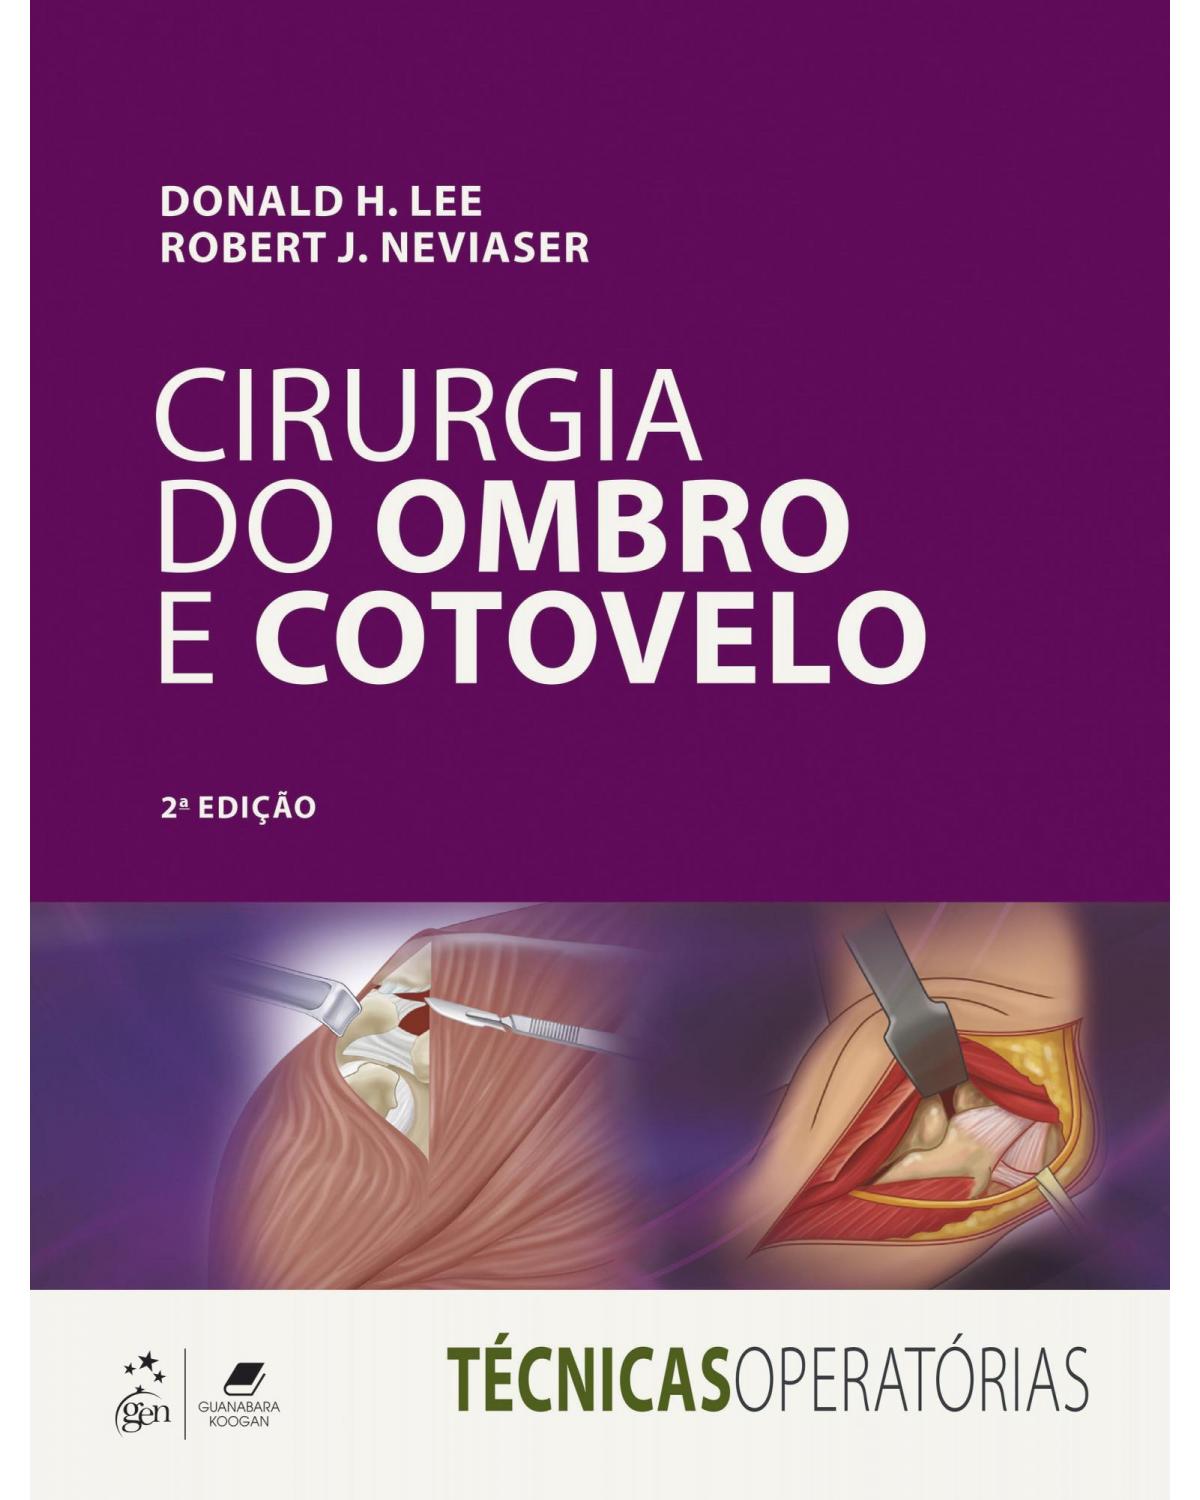 Cirurgia do ombro e cotovelo - 2ª Edição | 2020